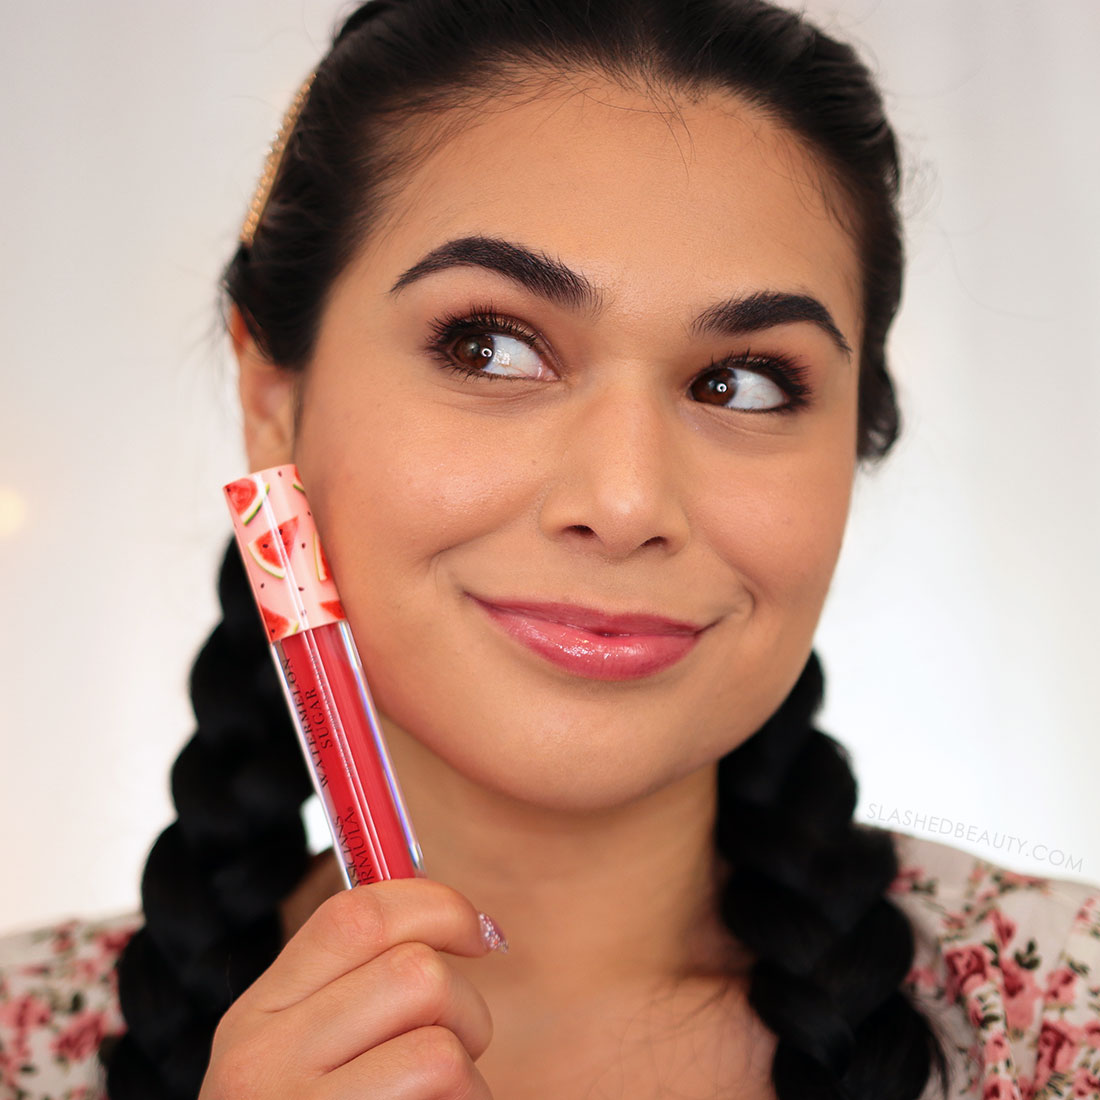 Miranda wearing Physicians Formula Watermelon Sugar Lipgloss in Juicy | 7 Perfect Spring Drugstore Lipsticks & Lip Glosses | Slashed Beauty